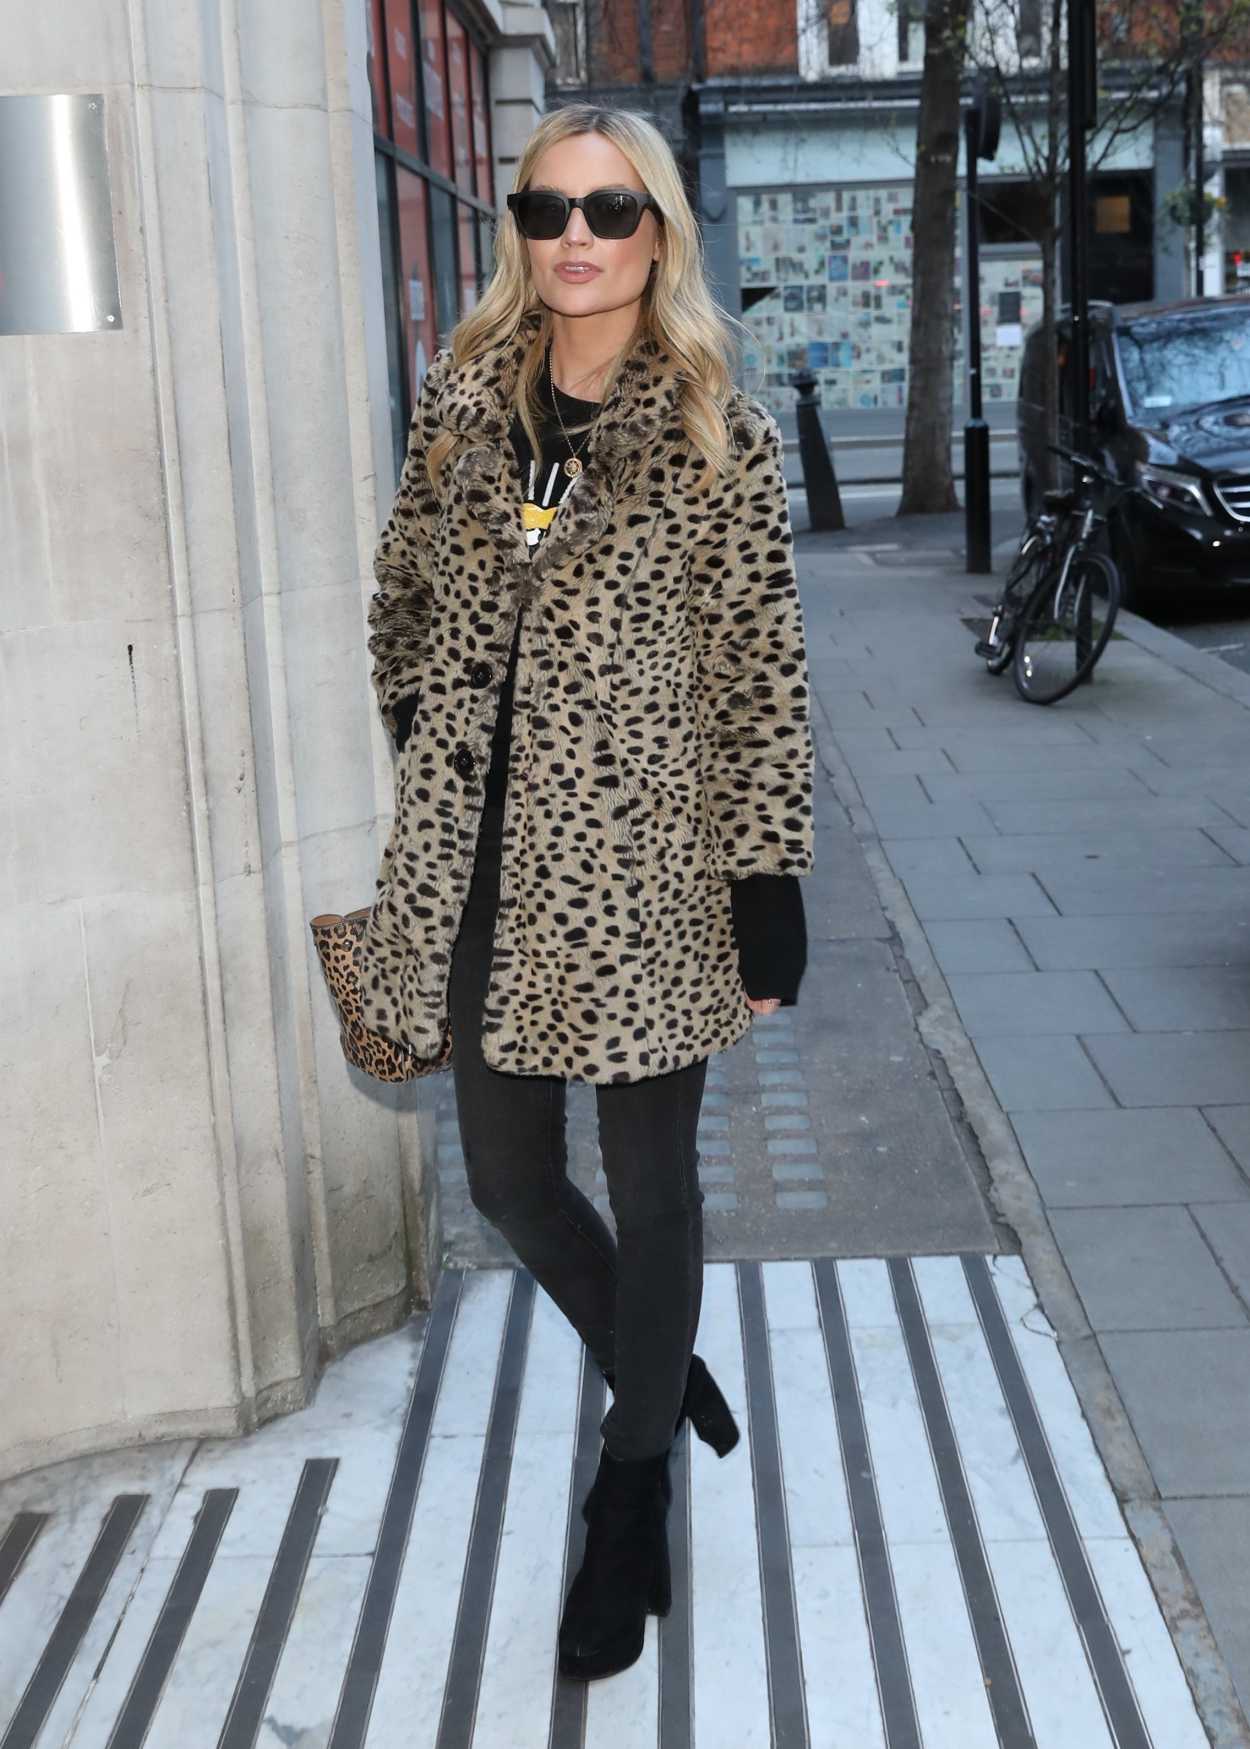 Laura Whitmore in a Beige Leopard Print Fur Coat Leaves the BBC Studio ...